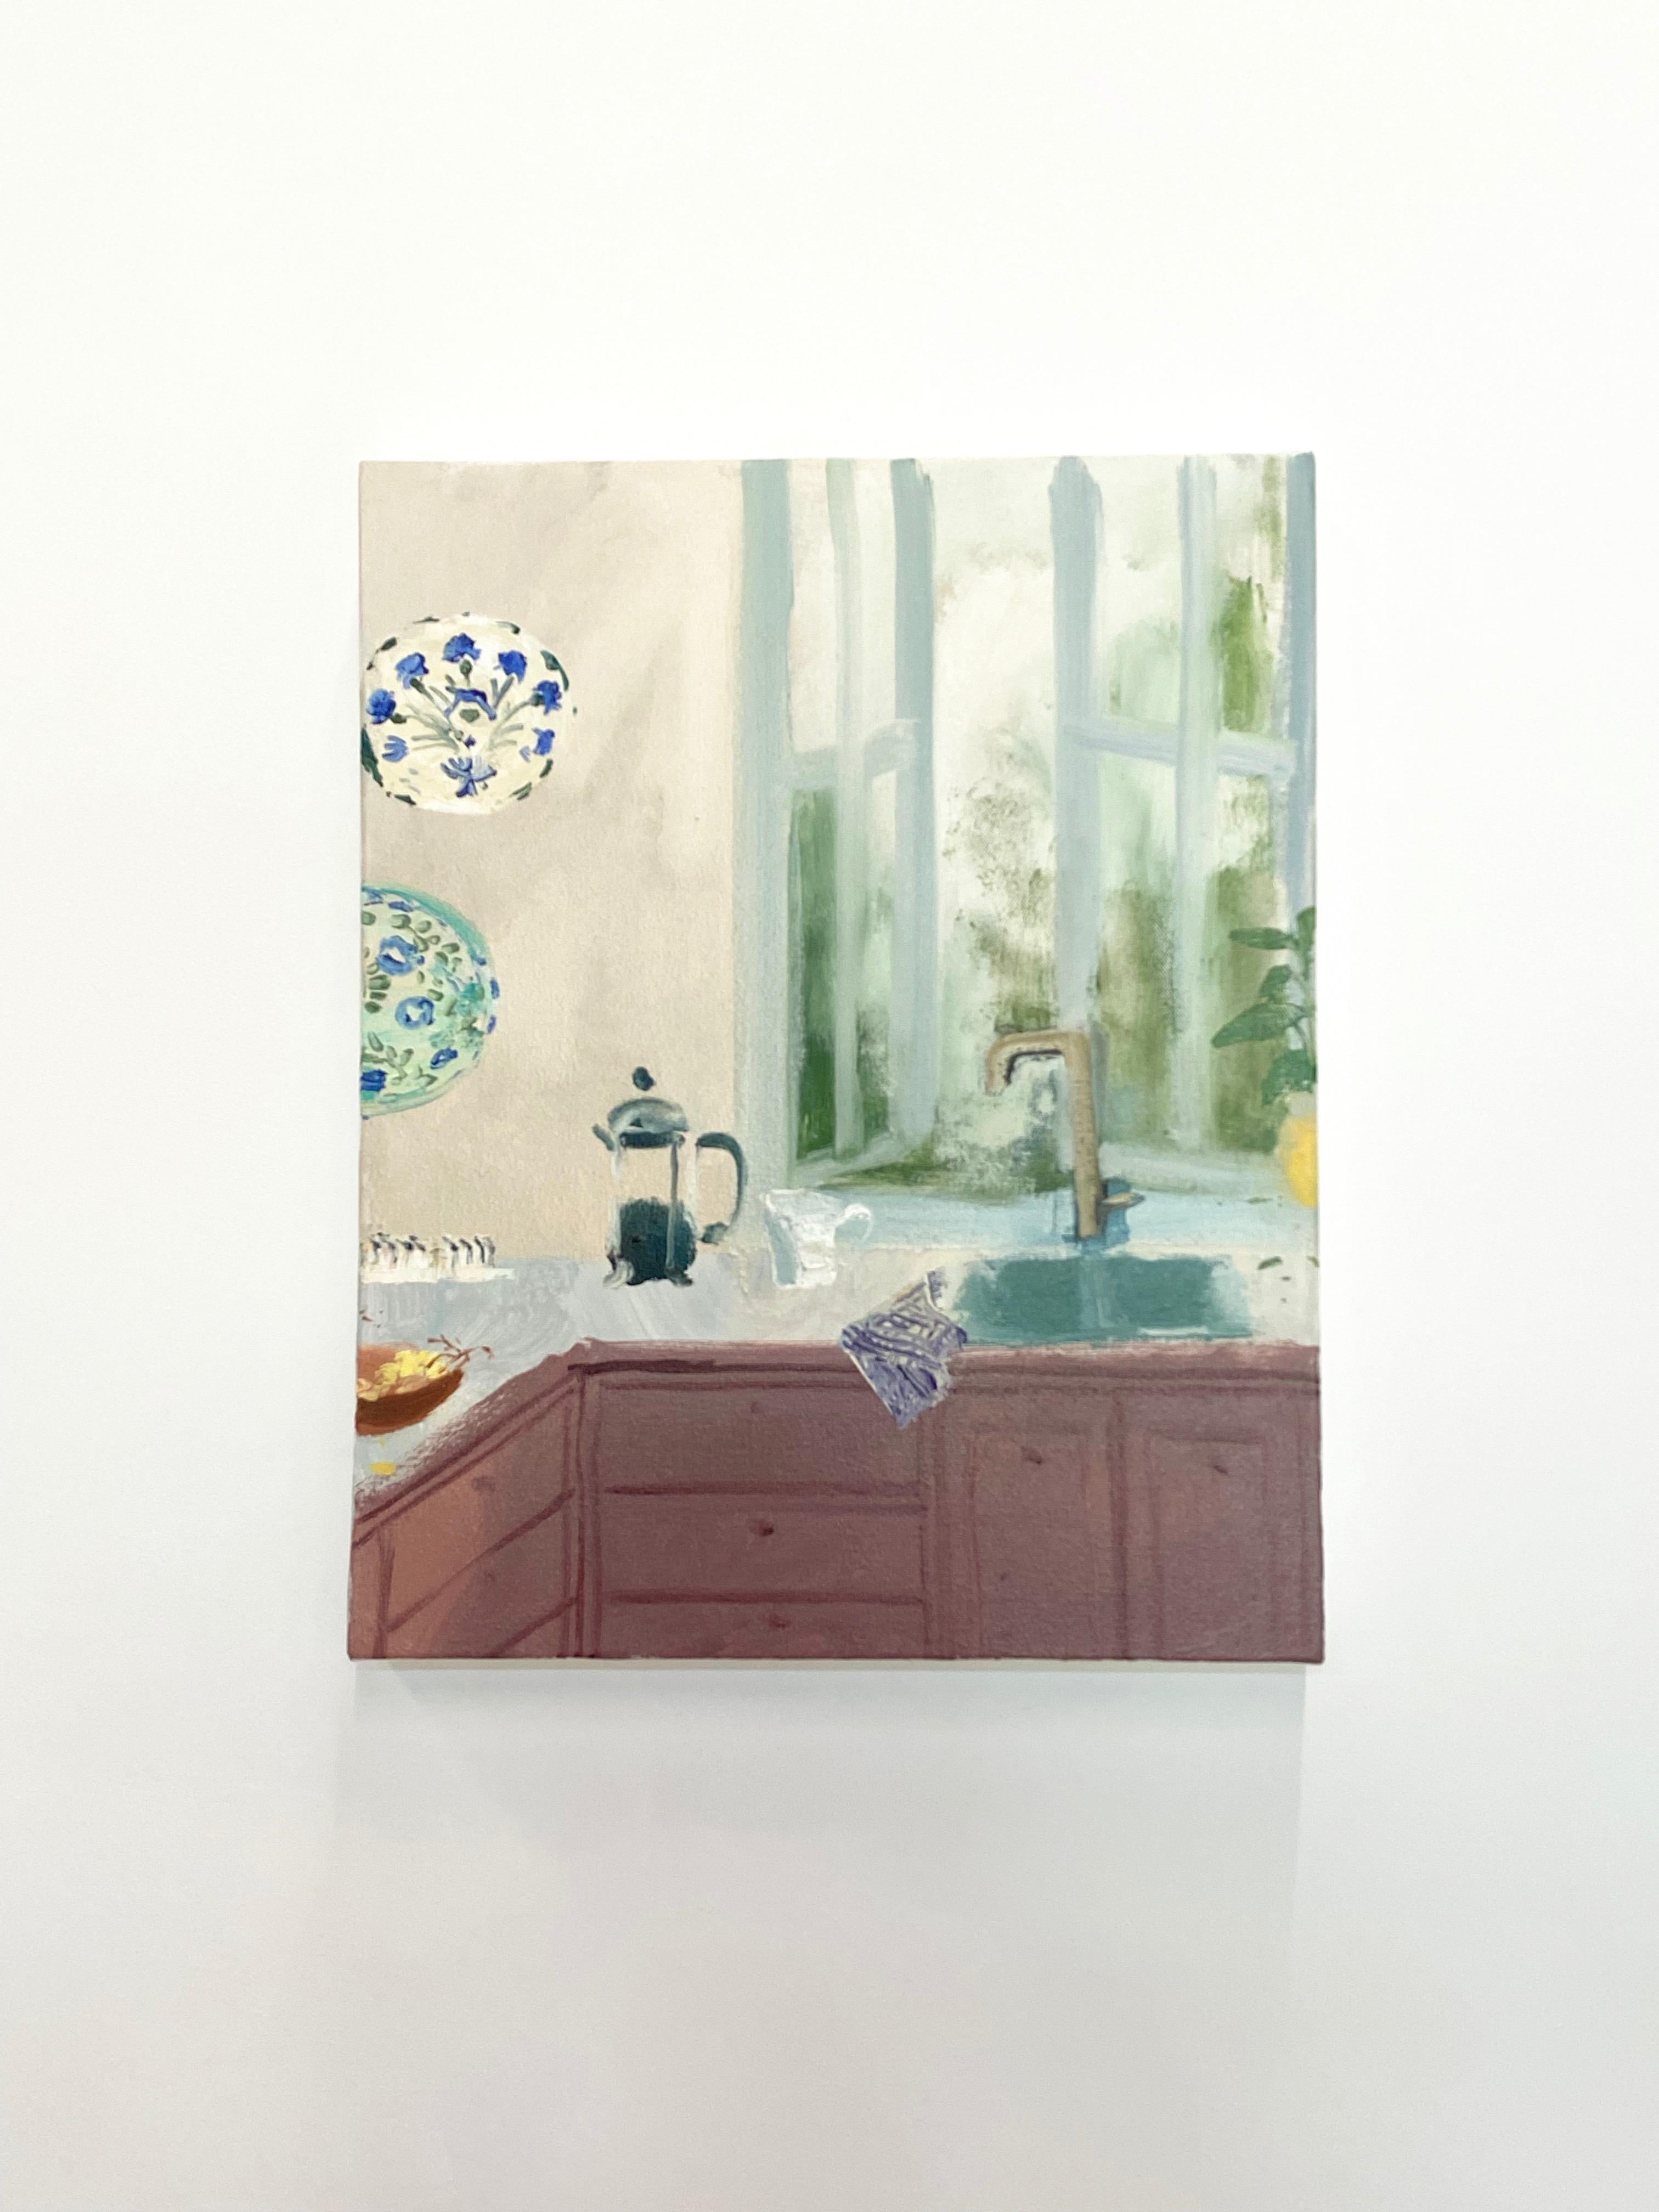 Aztec Mocha, Kitchen, Blue China Plates, Plants, Open Window Interior Still Life - Painting by Melanie Parke